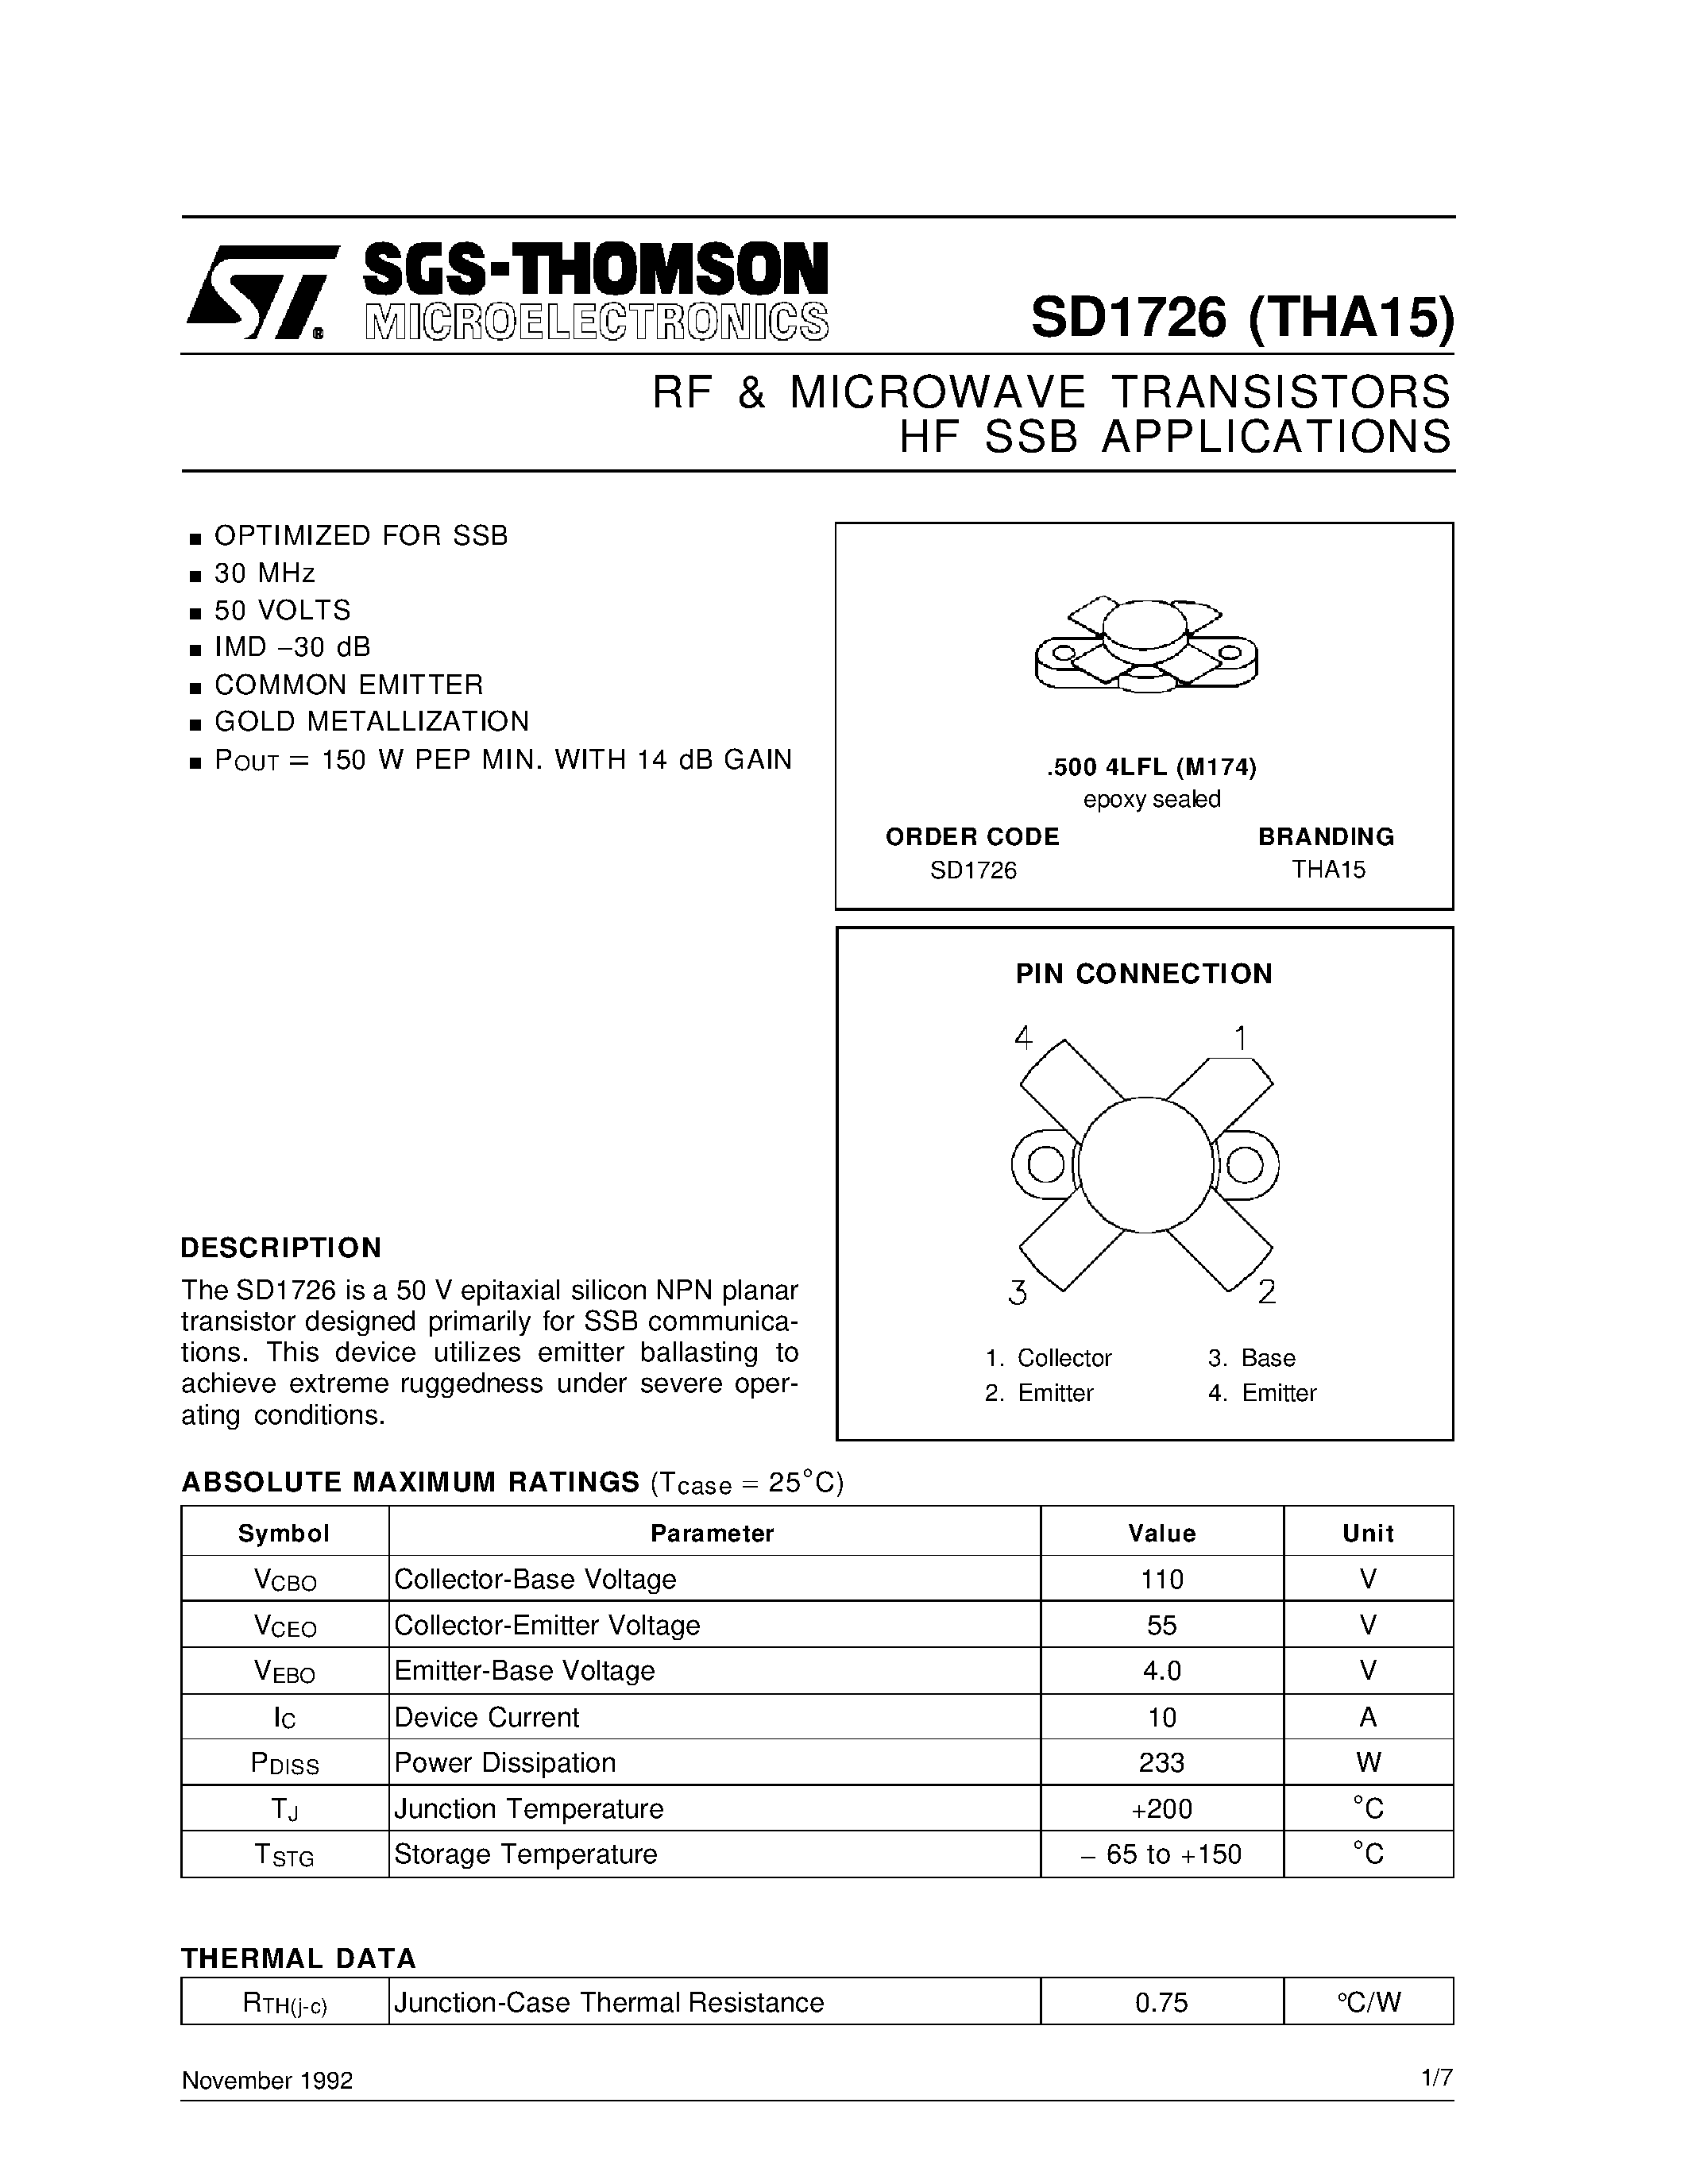 Datasheet SD1726 - RF & MICROWAVE TRANSISTORS HF SSB APPLICATIONS page 1